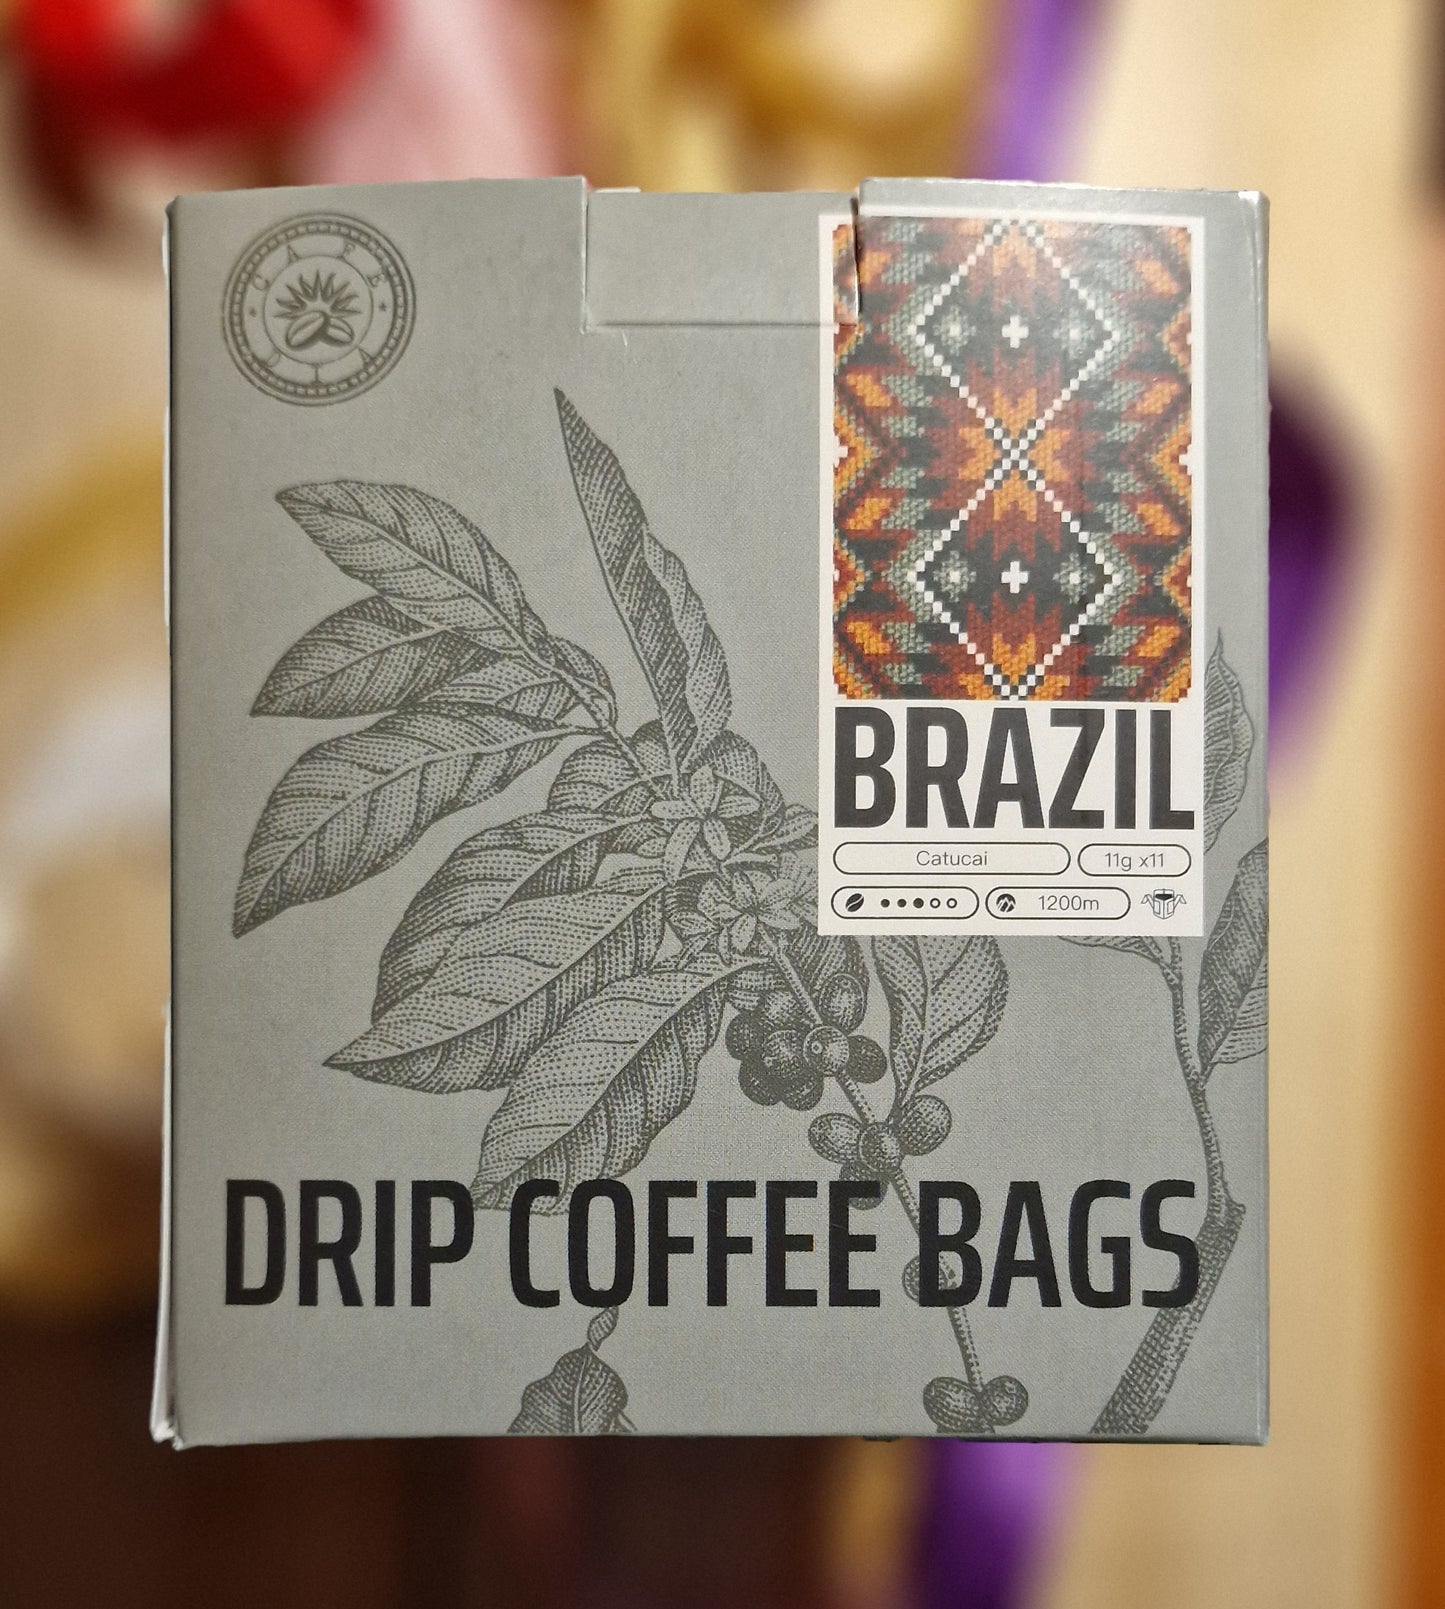 DRIP COFFEE kafijas maisiņi 11x11g BRAZIL